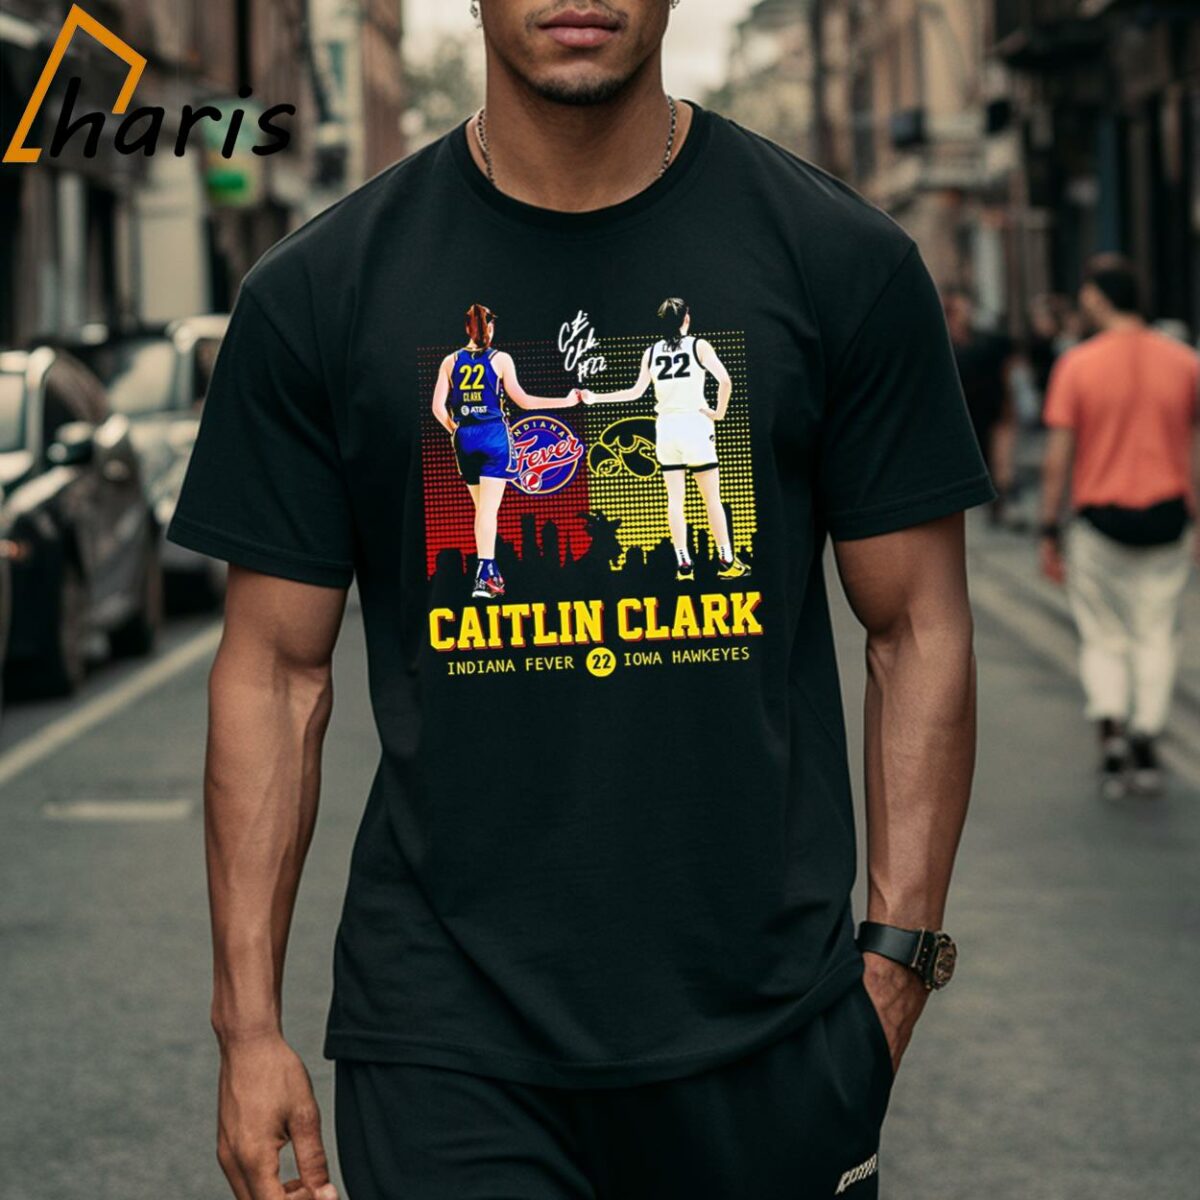 Caitlin Clark Indiana Fever 22 Iowa Hawkeyes Shirt 2 Shirt